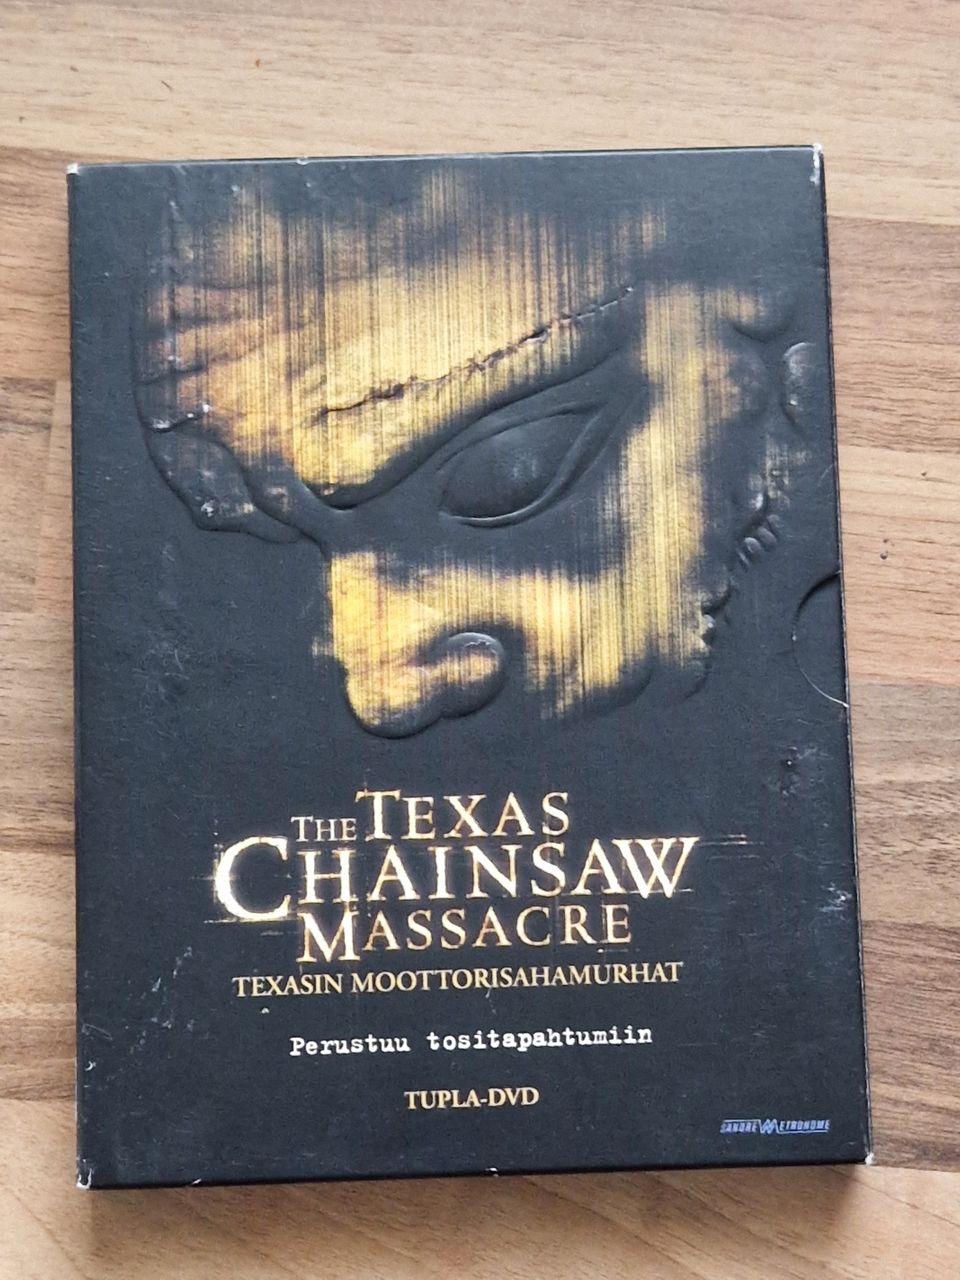 The Texas Chainsaw Massacre - FI DVD